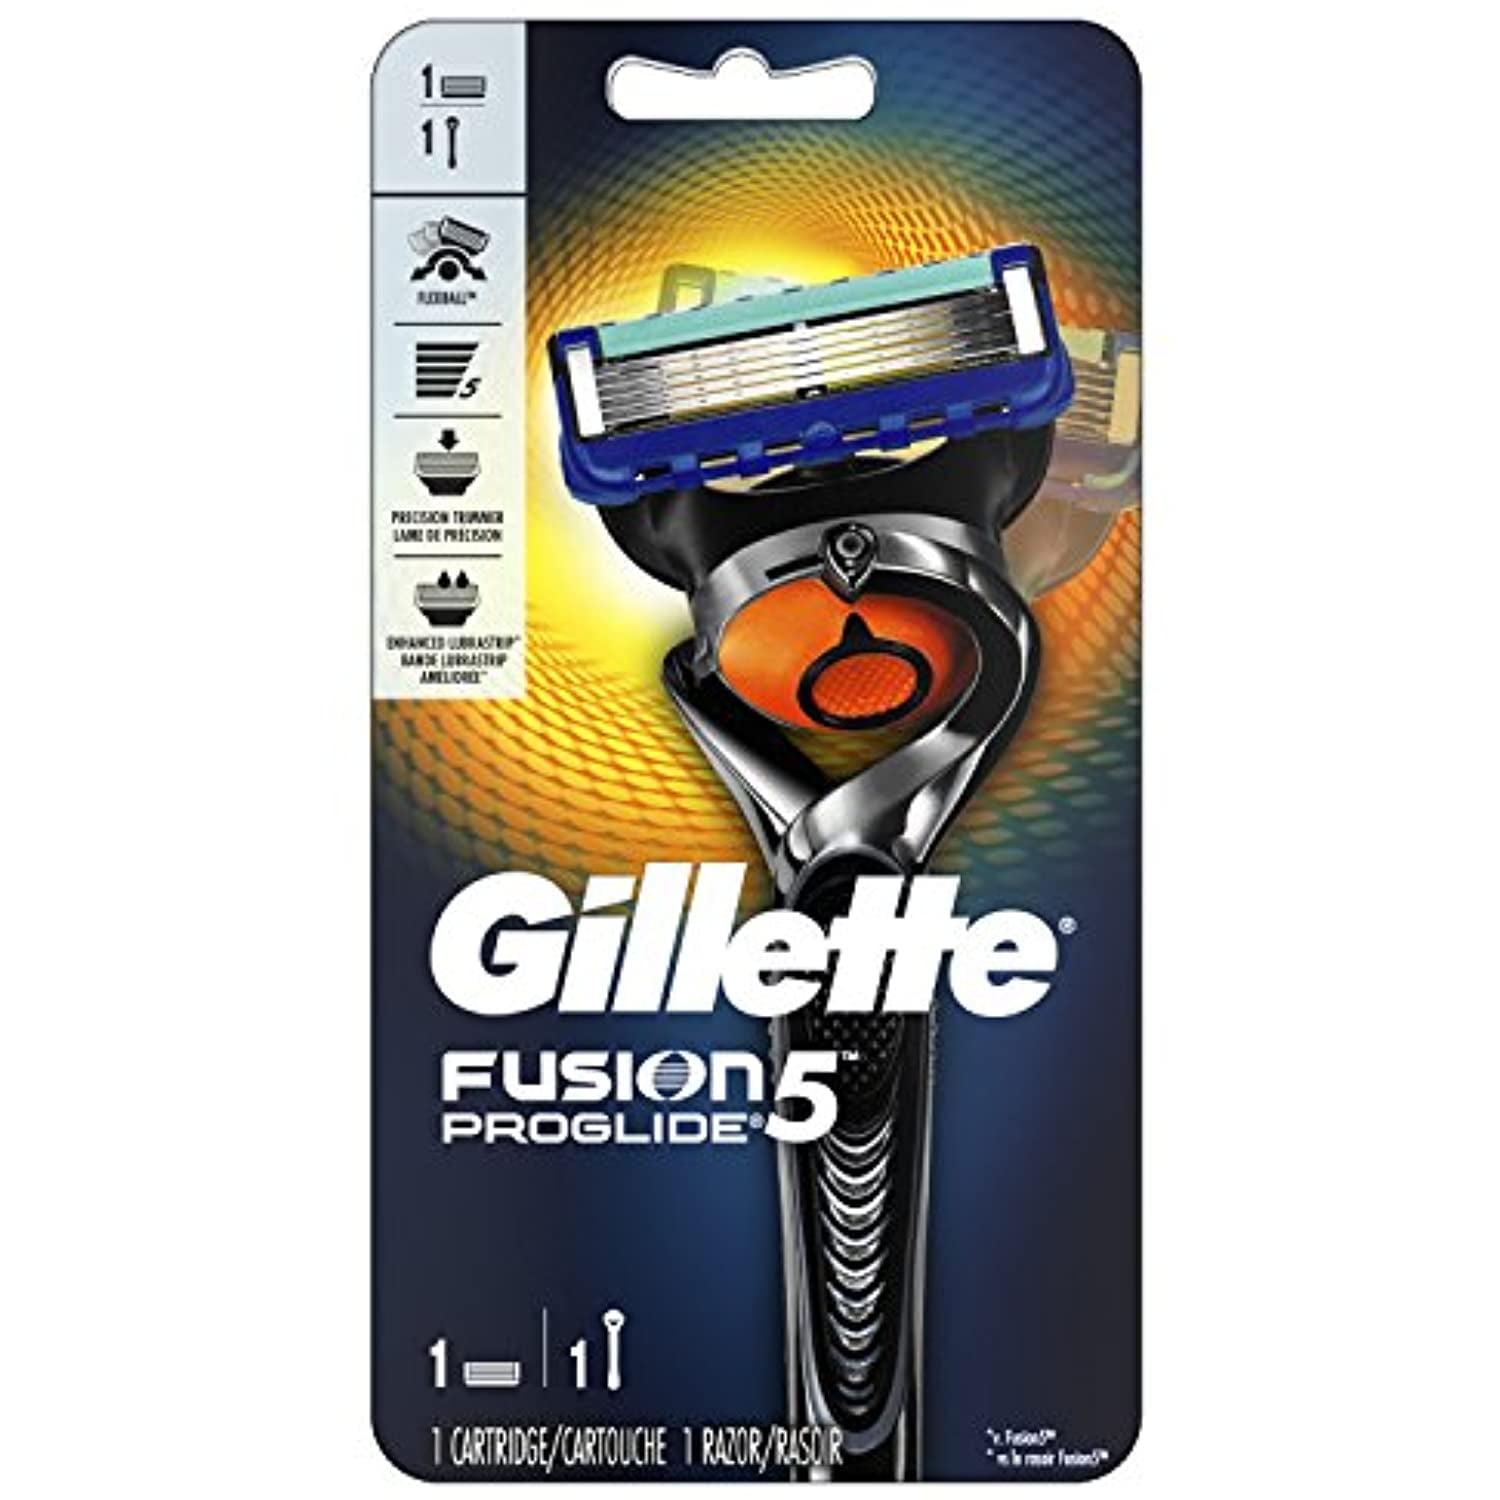 Gillette Fusion Proglide Manual Mens Razor With Flexball Handle Technology With 1 Razor Blade